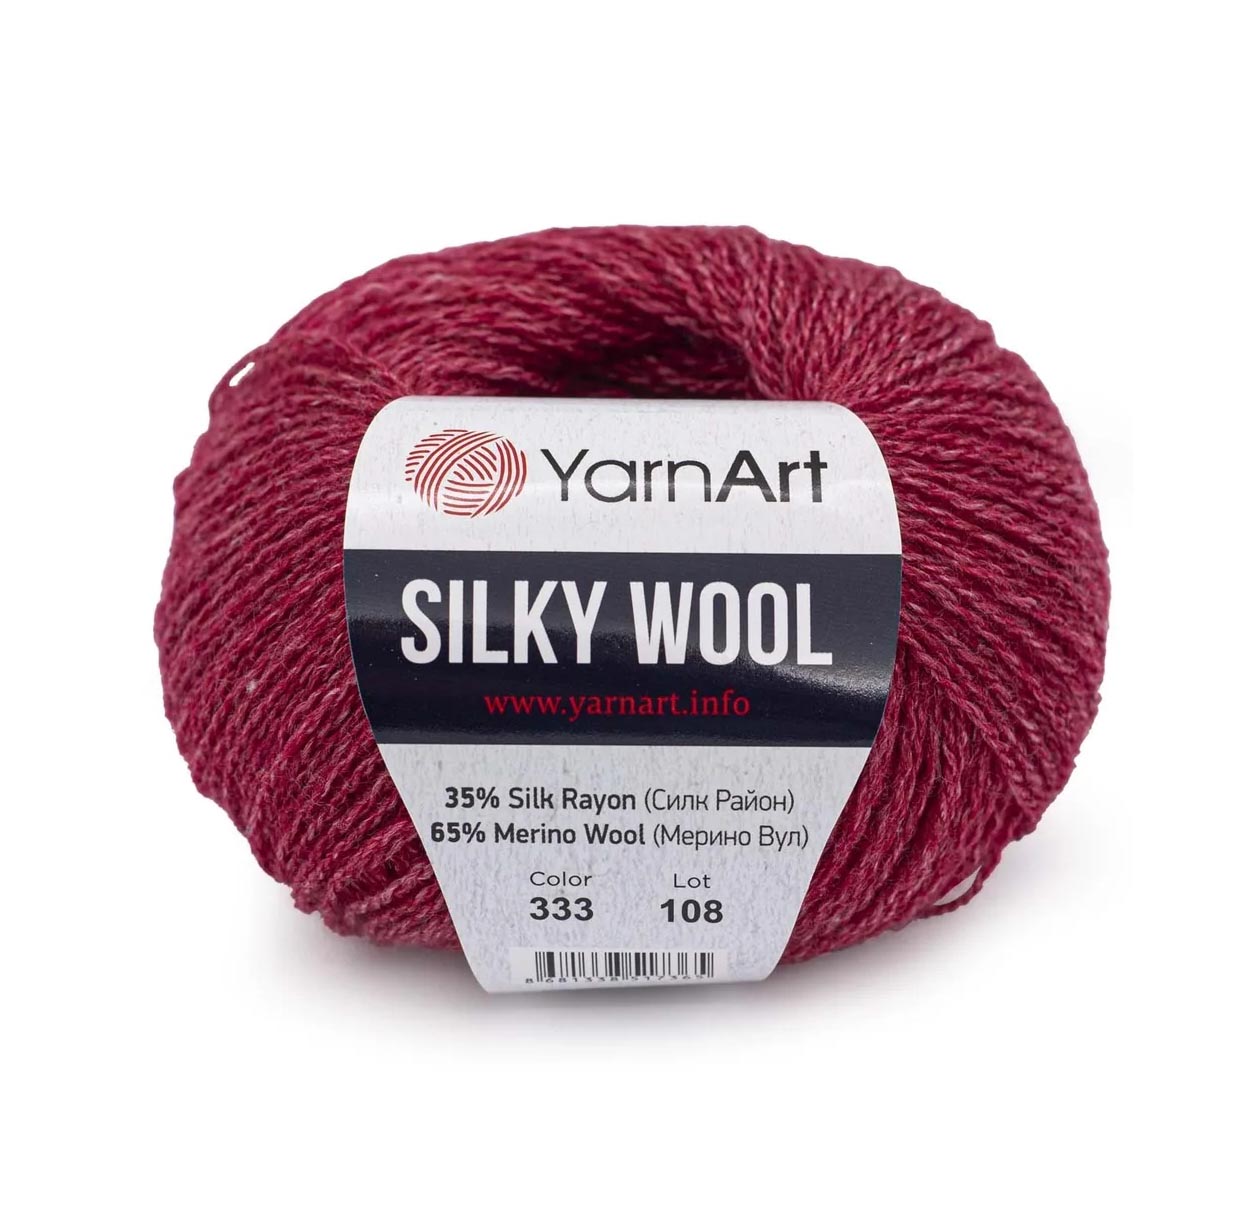 YarnArt Silky wool 333 -